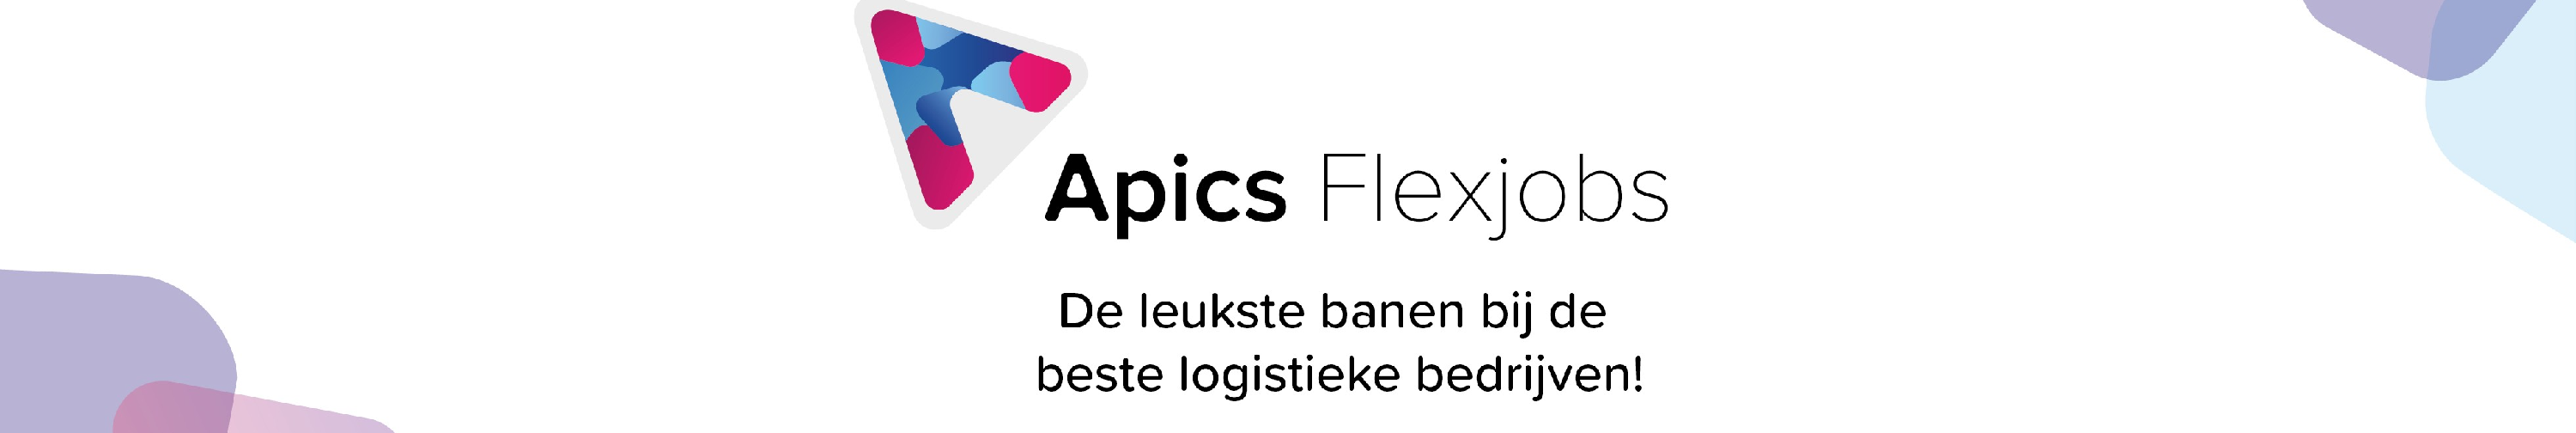 Apics Flexjobs background